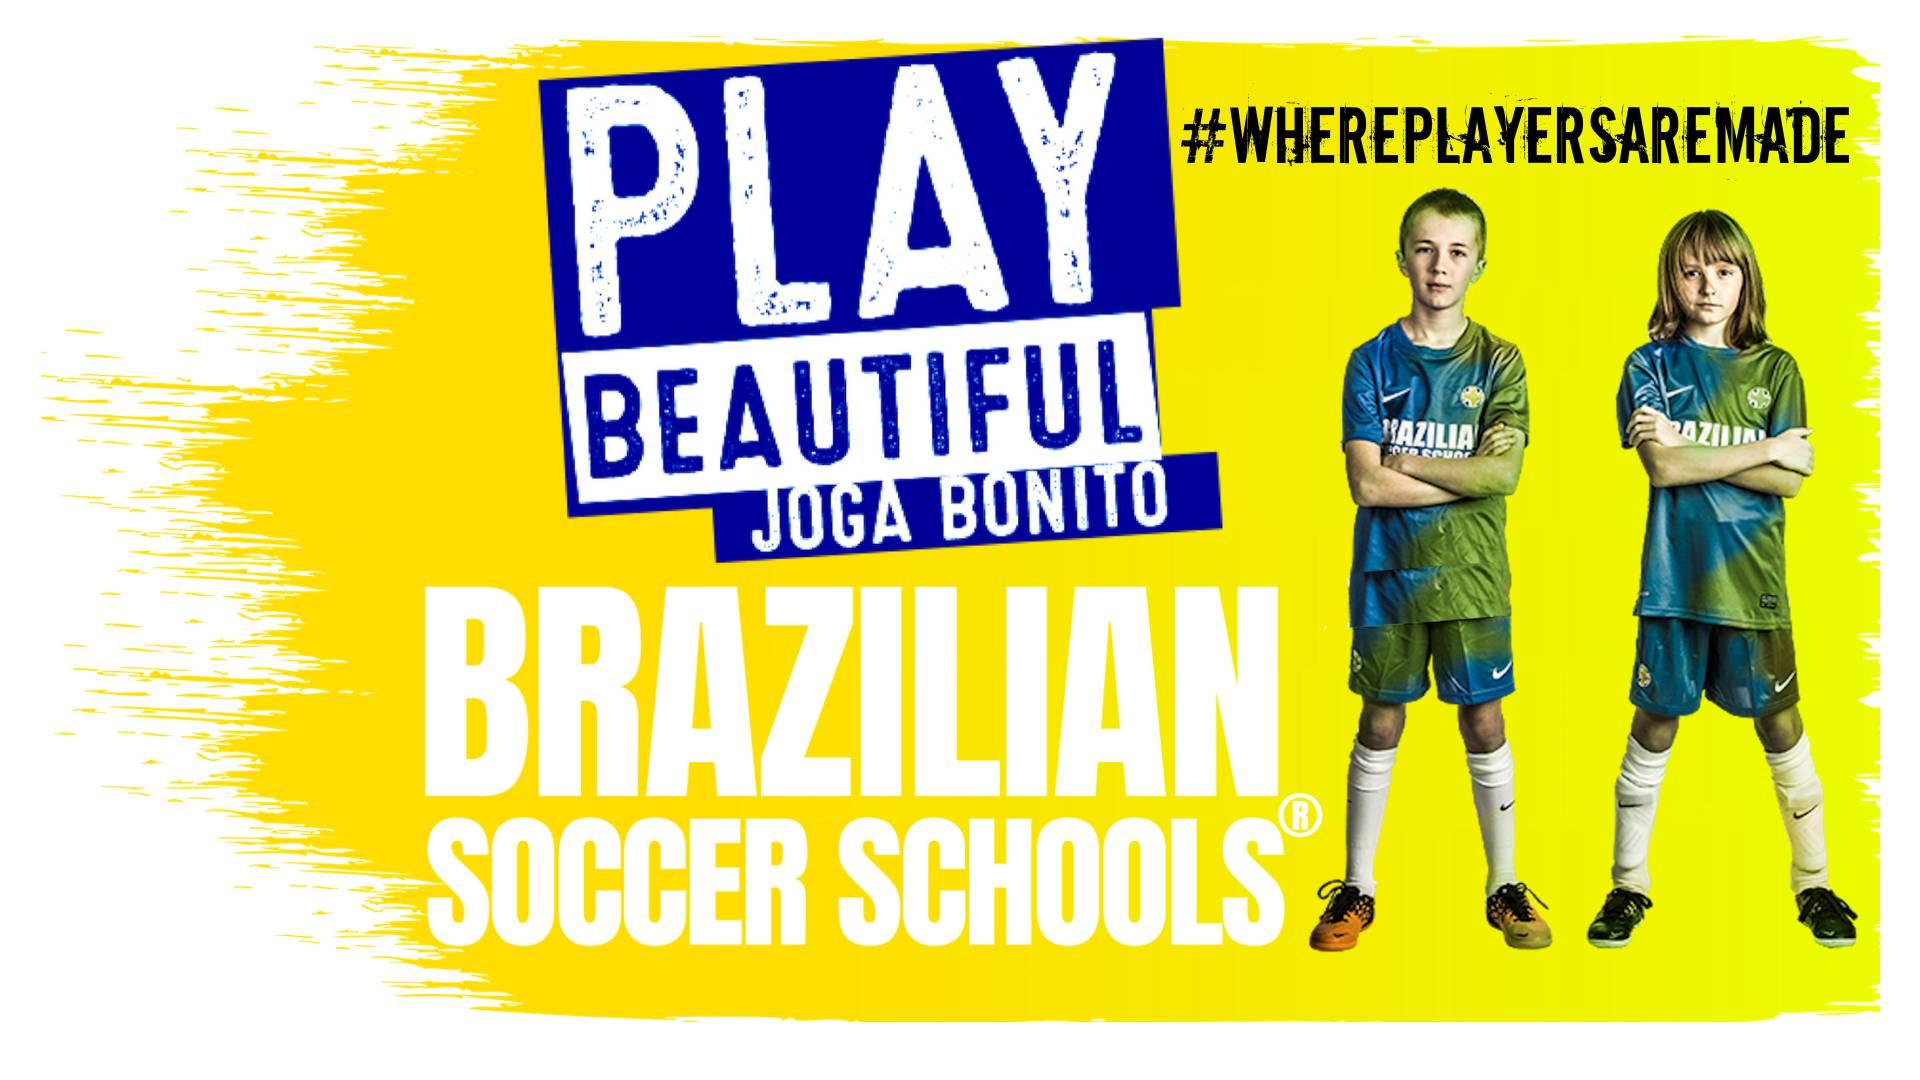 Brazilian Soccer Schools photo